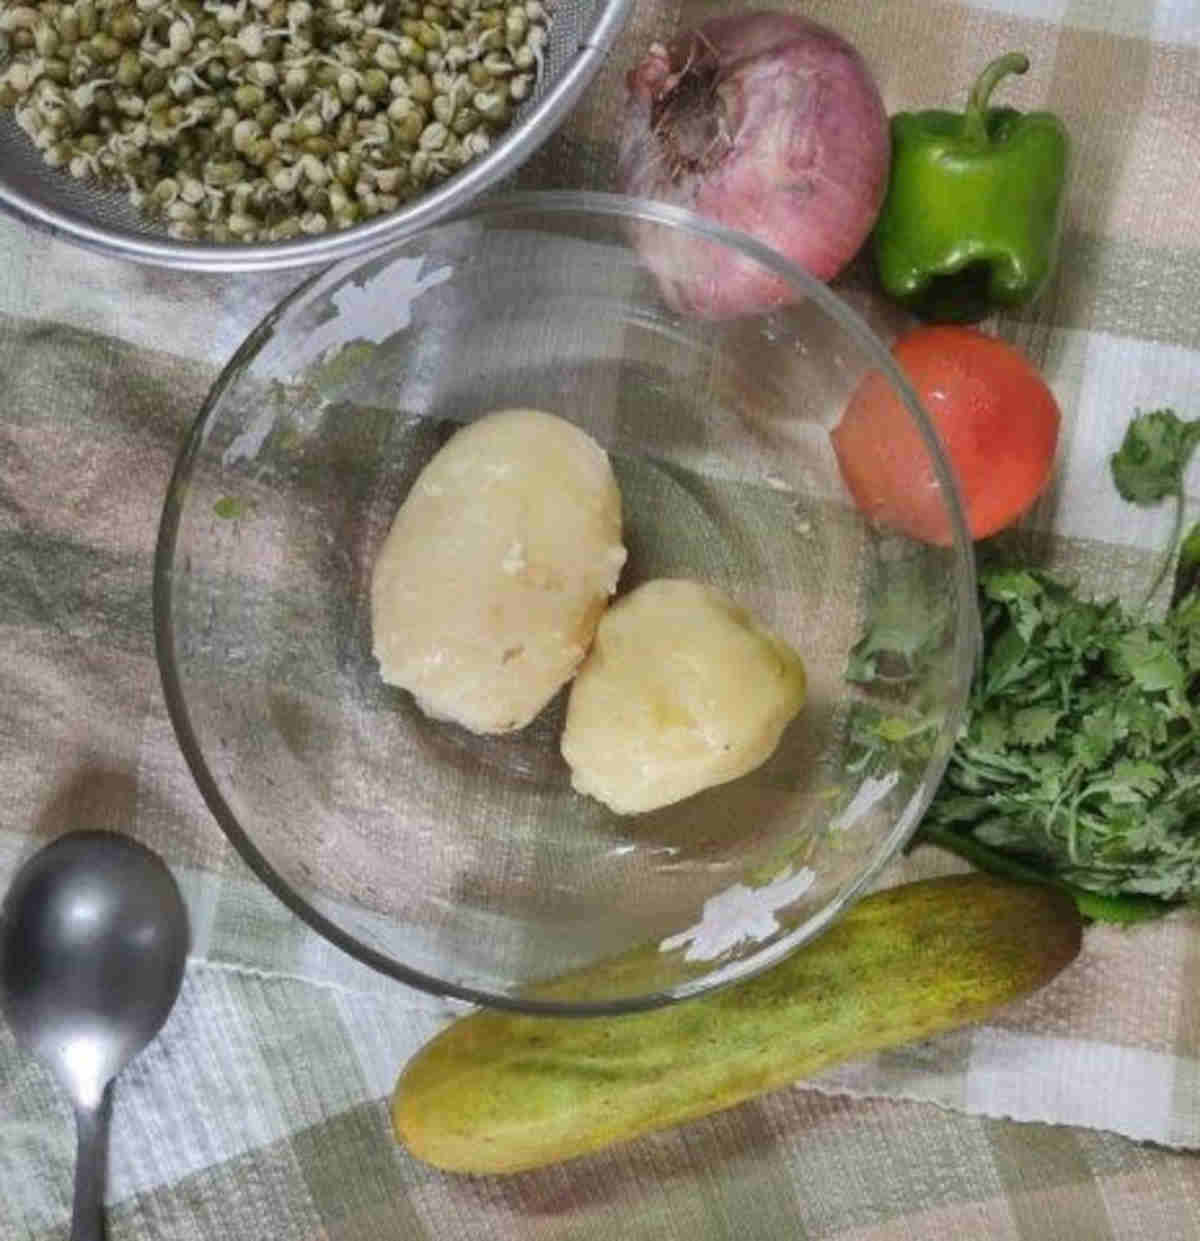 ingredients for mashed potato salad